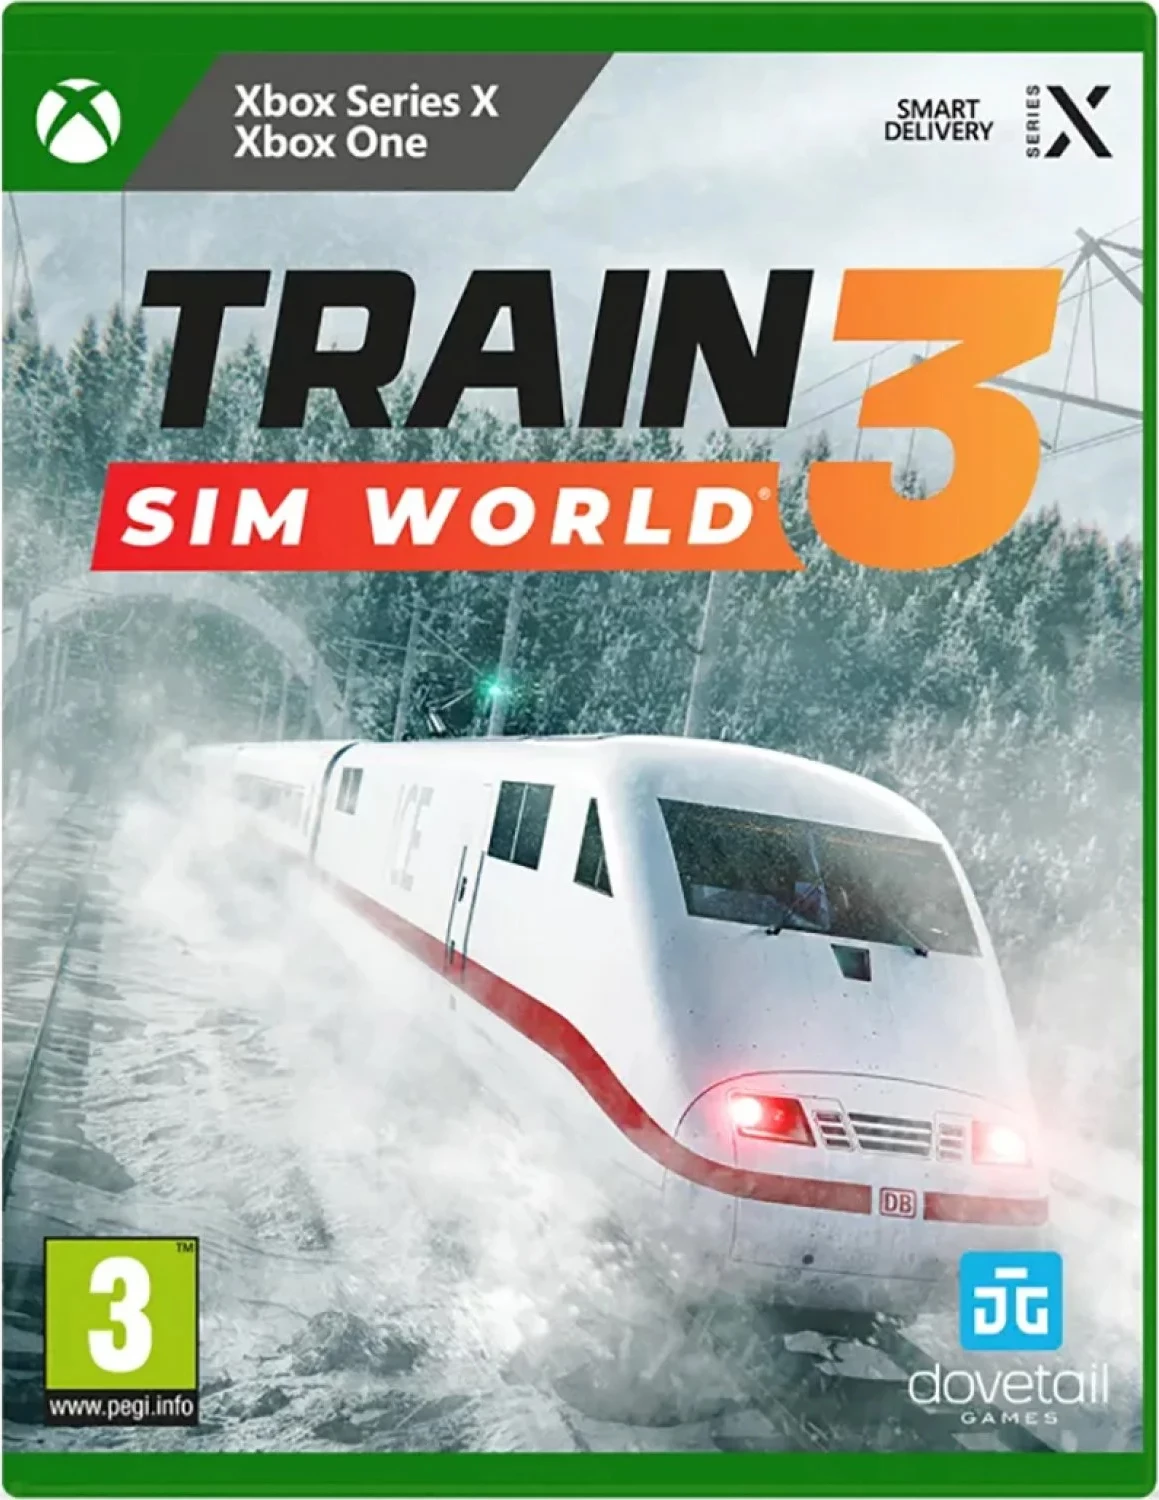 Train Sim World 3 (Xbox Series X), Dovetail Games